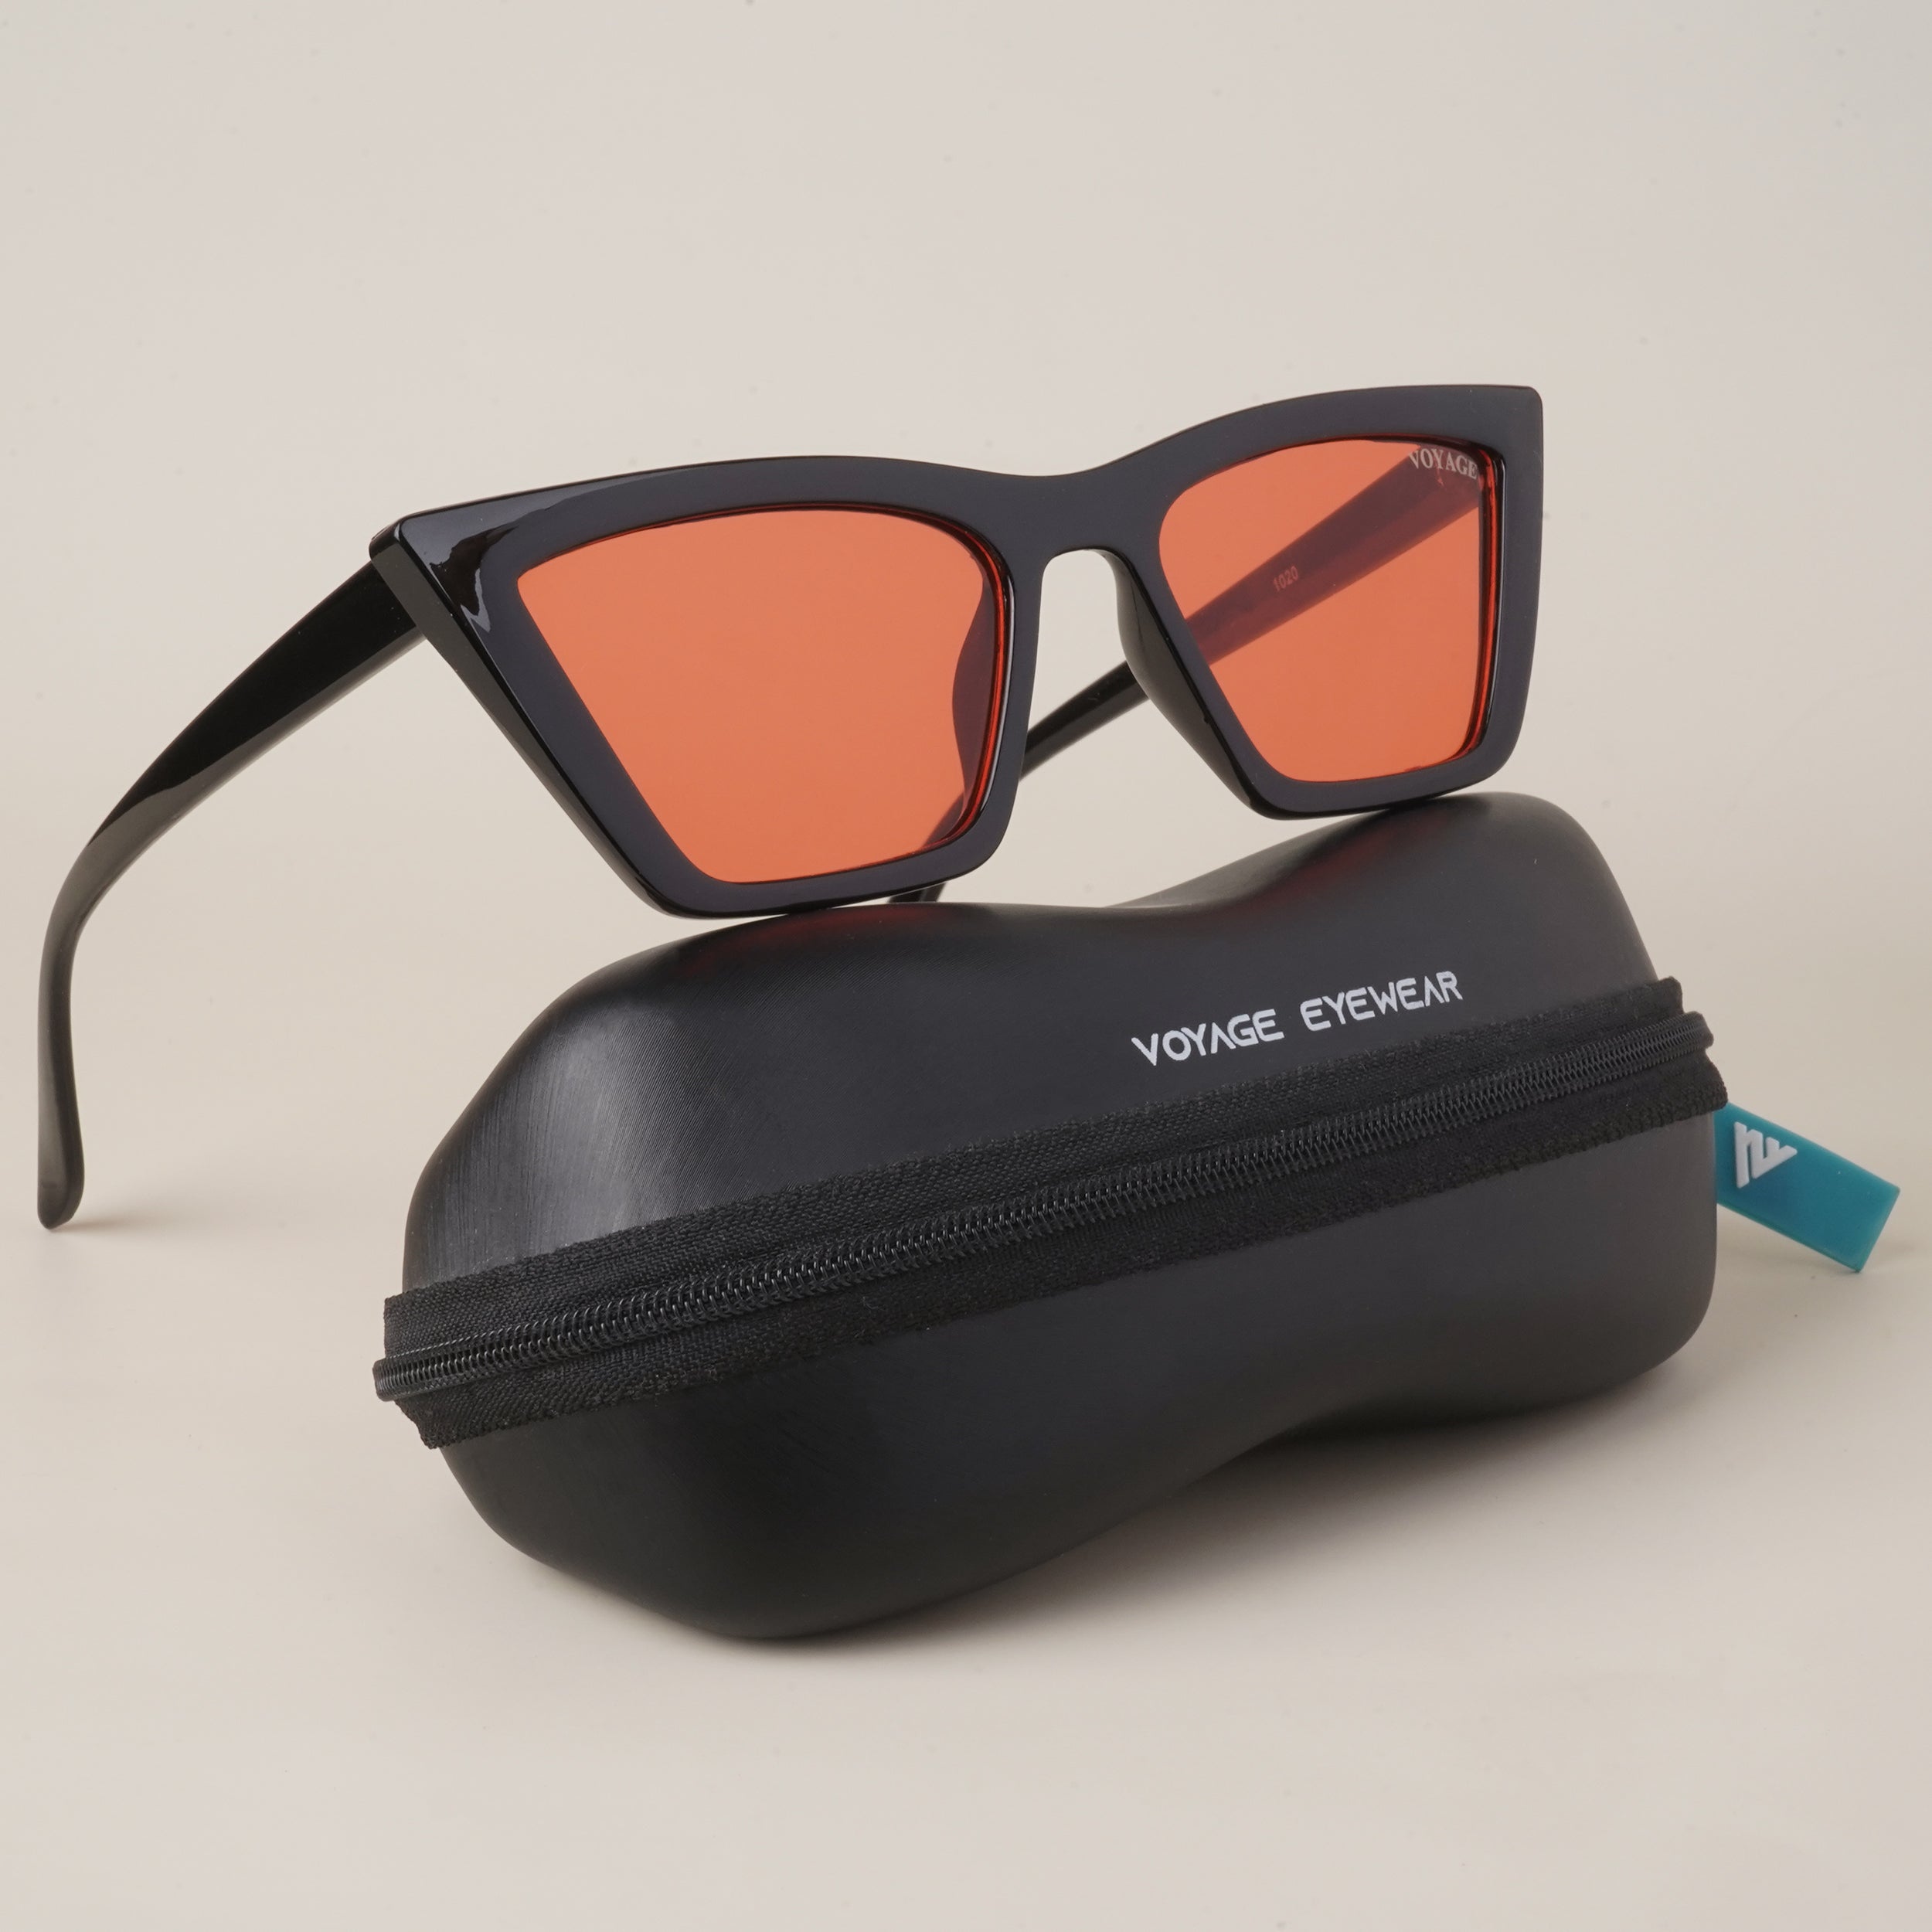 Voyage Black-Red Cateye Sunglasses - MG3299